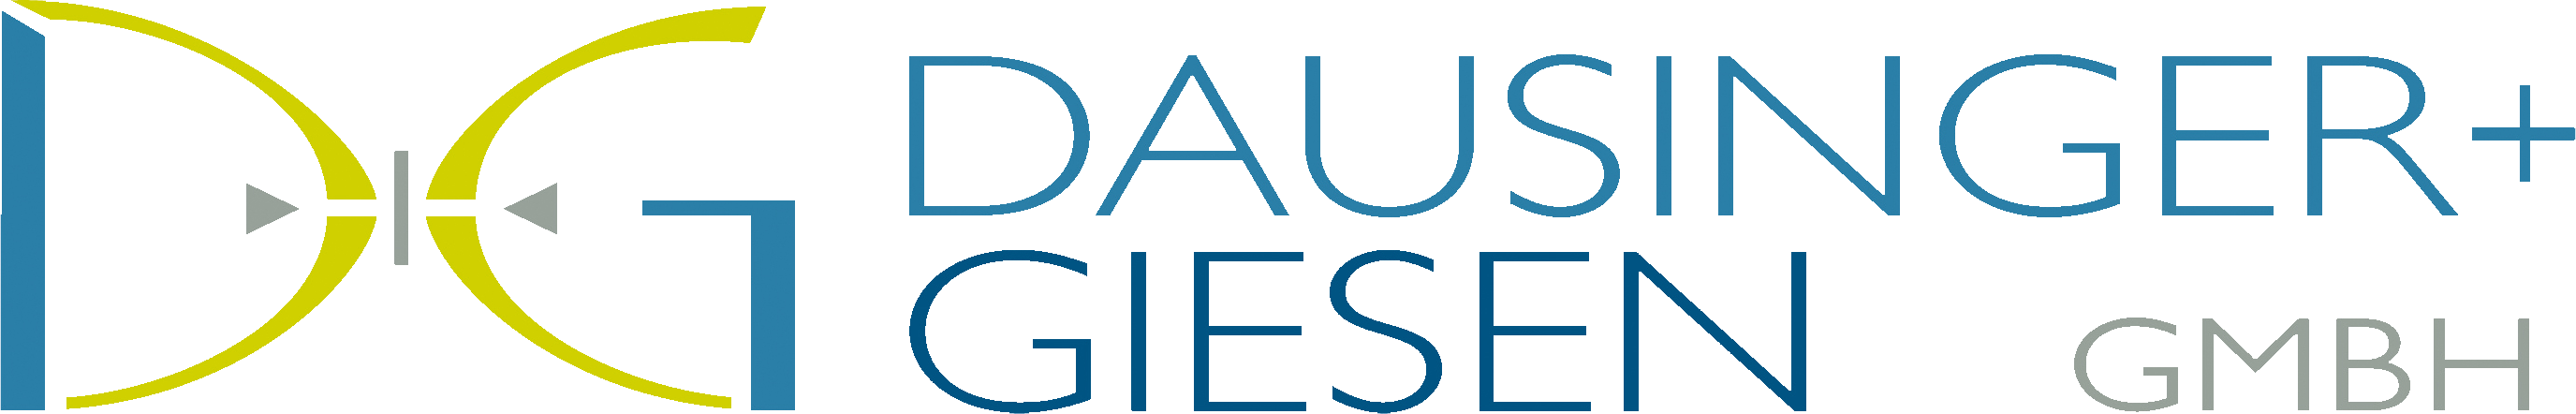 Dausinger + Giesen GmbH